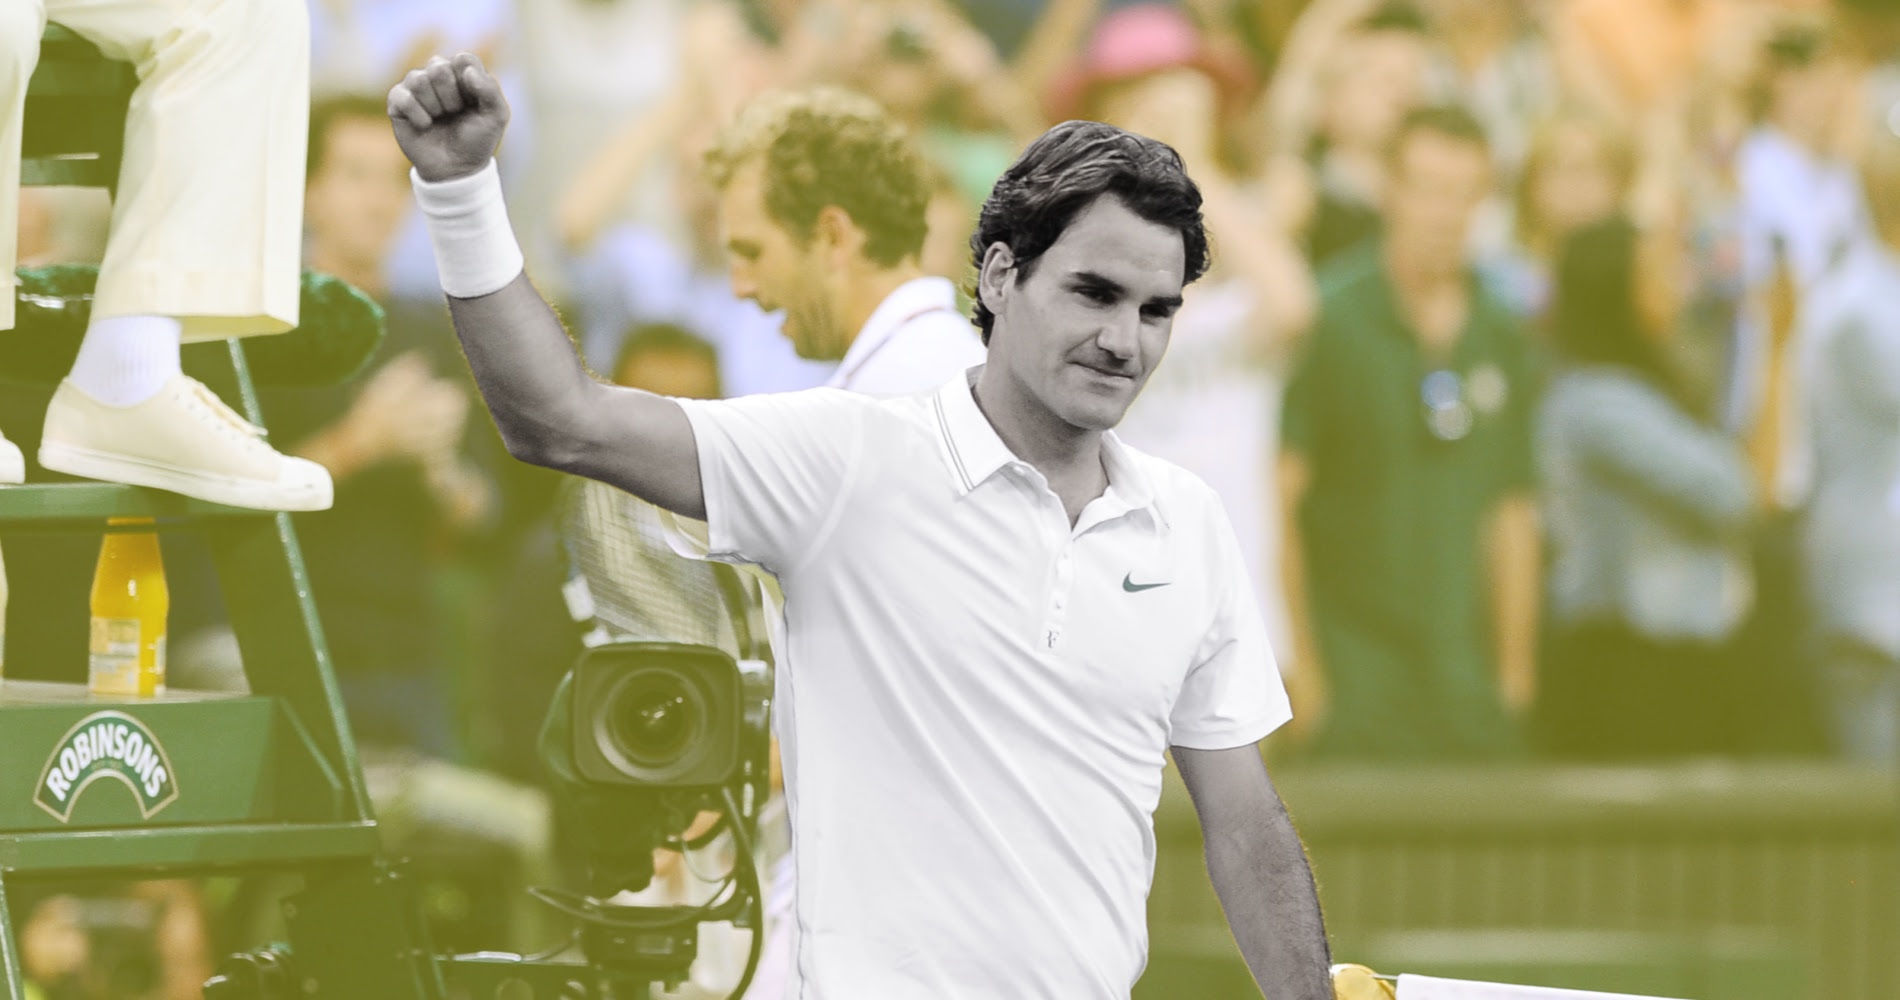 Roger Federer - On this day 06/29